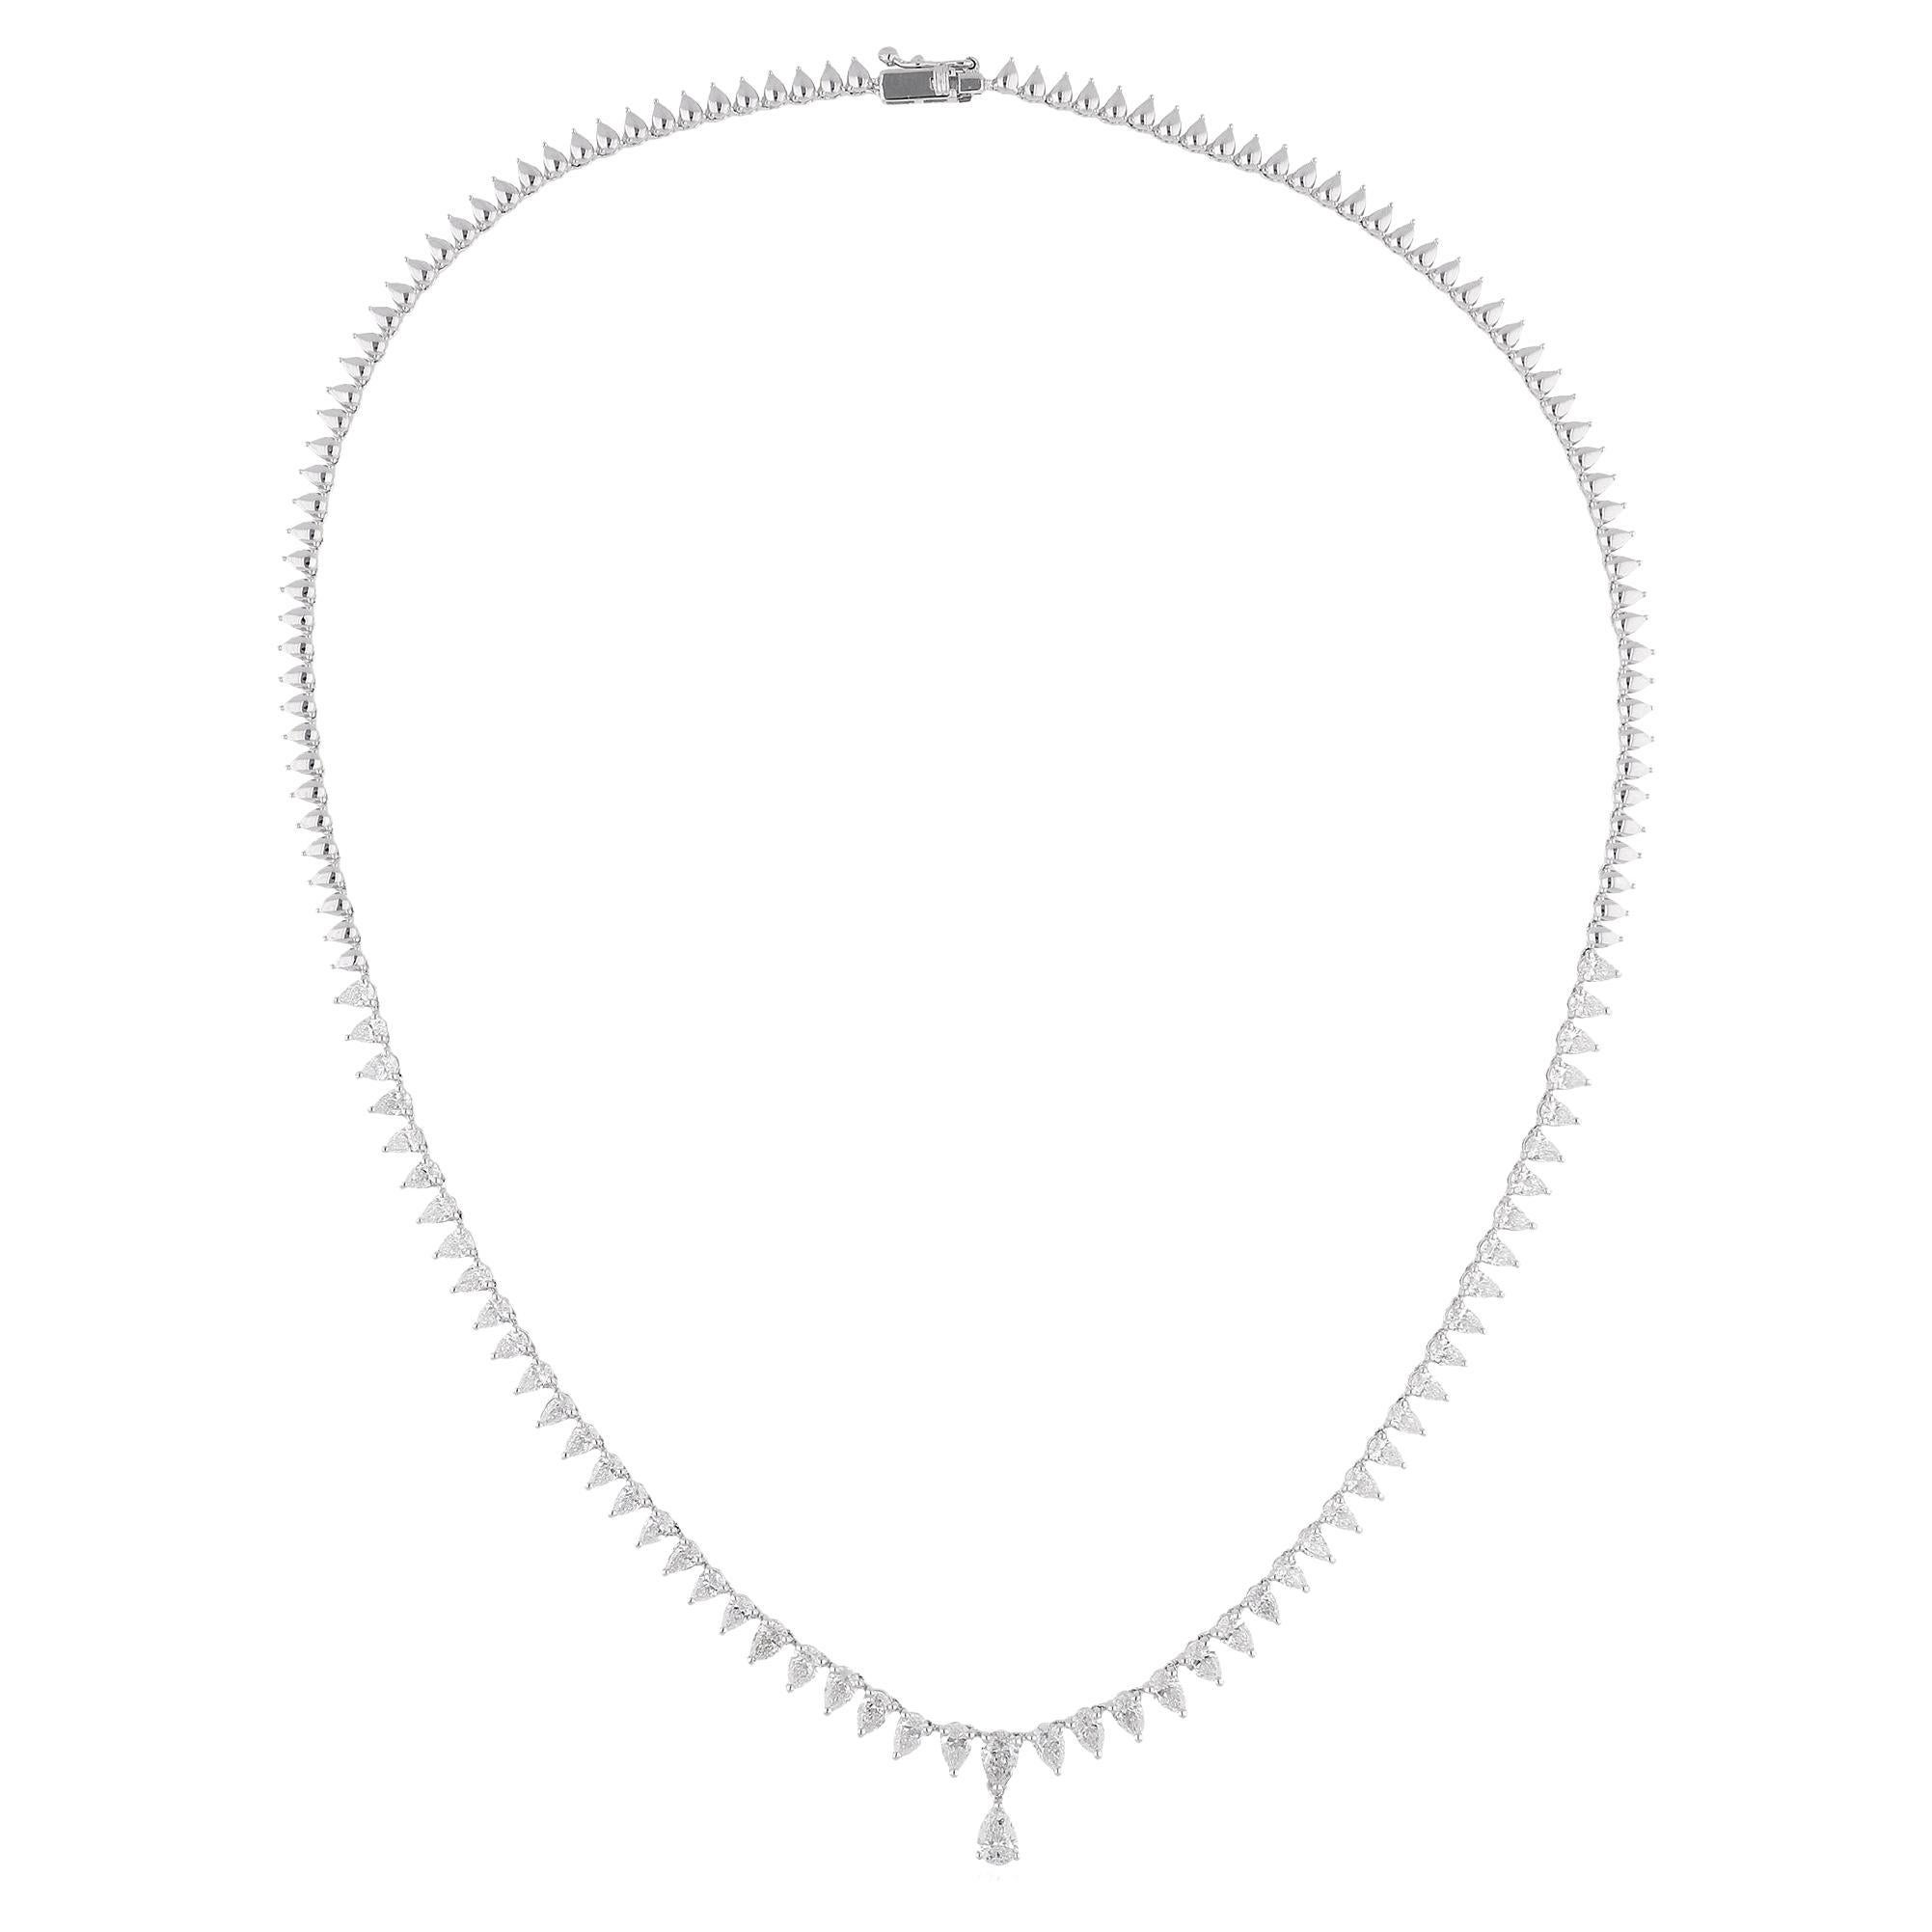 5.50 Carat Pear Shape Diamond Necklace 18 Karat White Gold Handmade Fine Jewelry For Sale